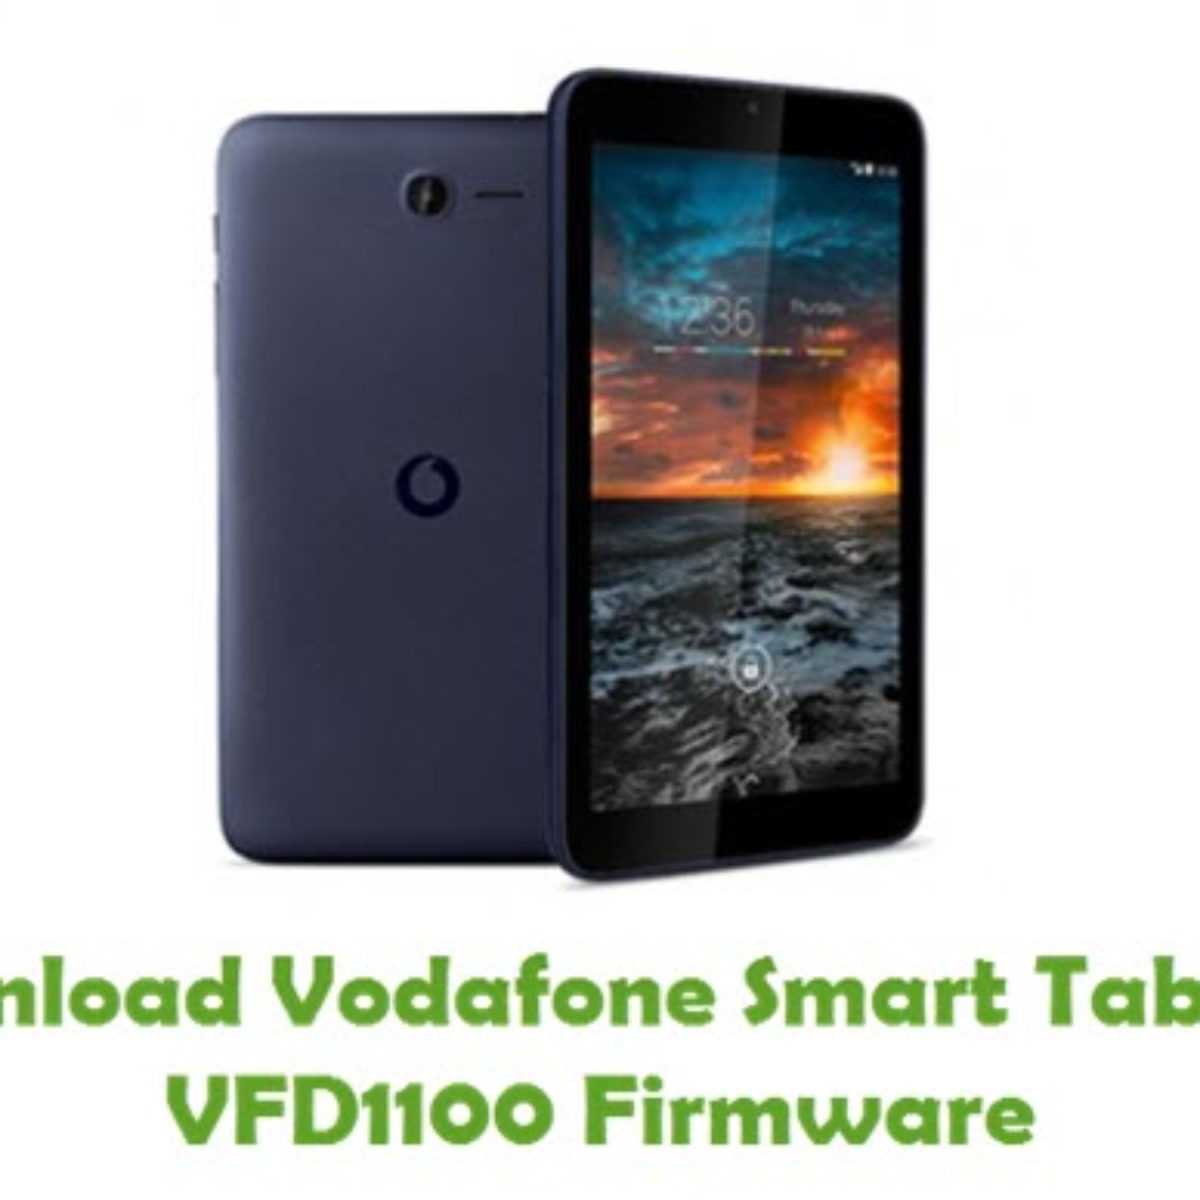 Download Vodafone Smart Tab 2 3g Vfd1100 Firmware